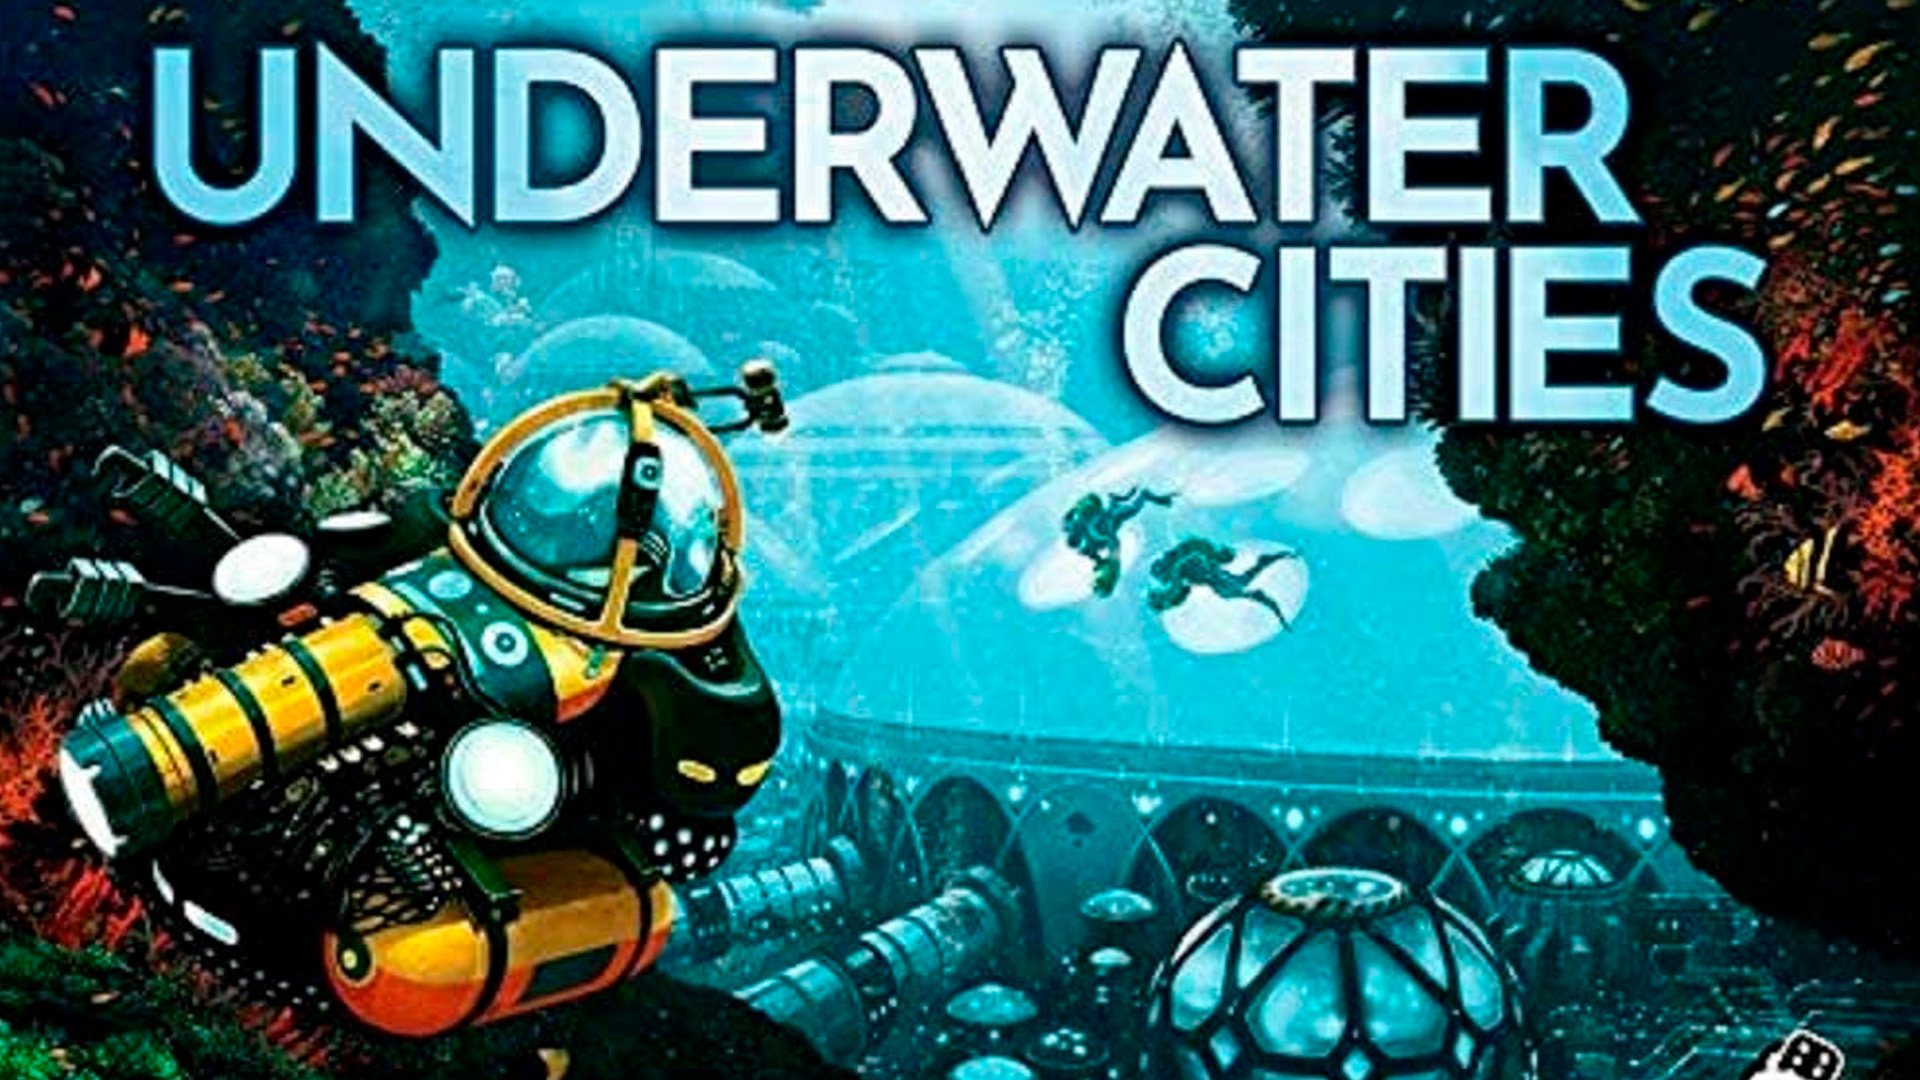 Desça às profundezas do mar com Underwater Cities